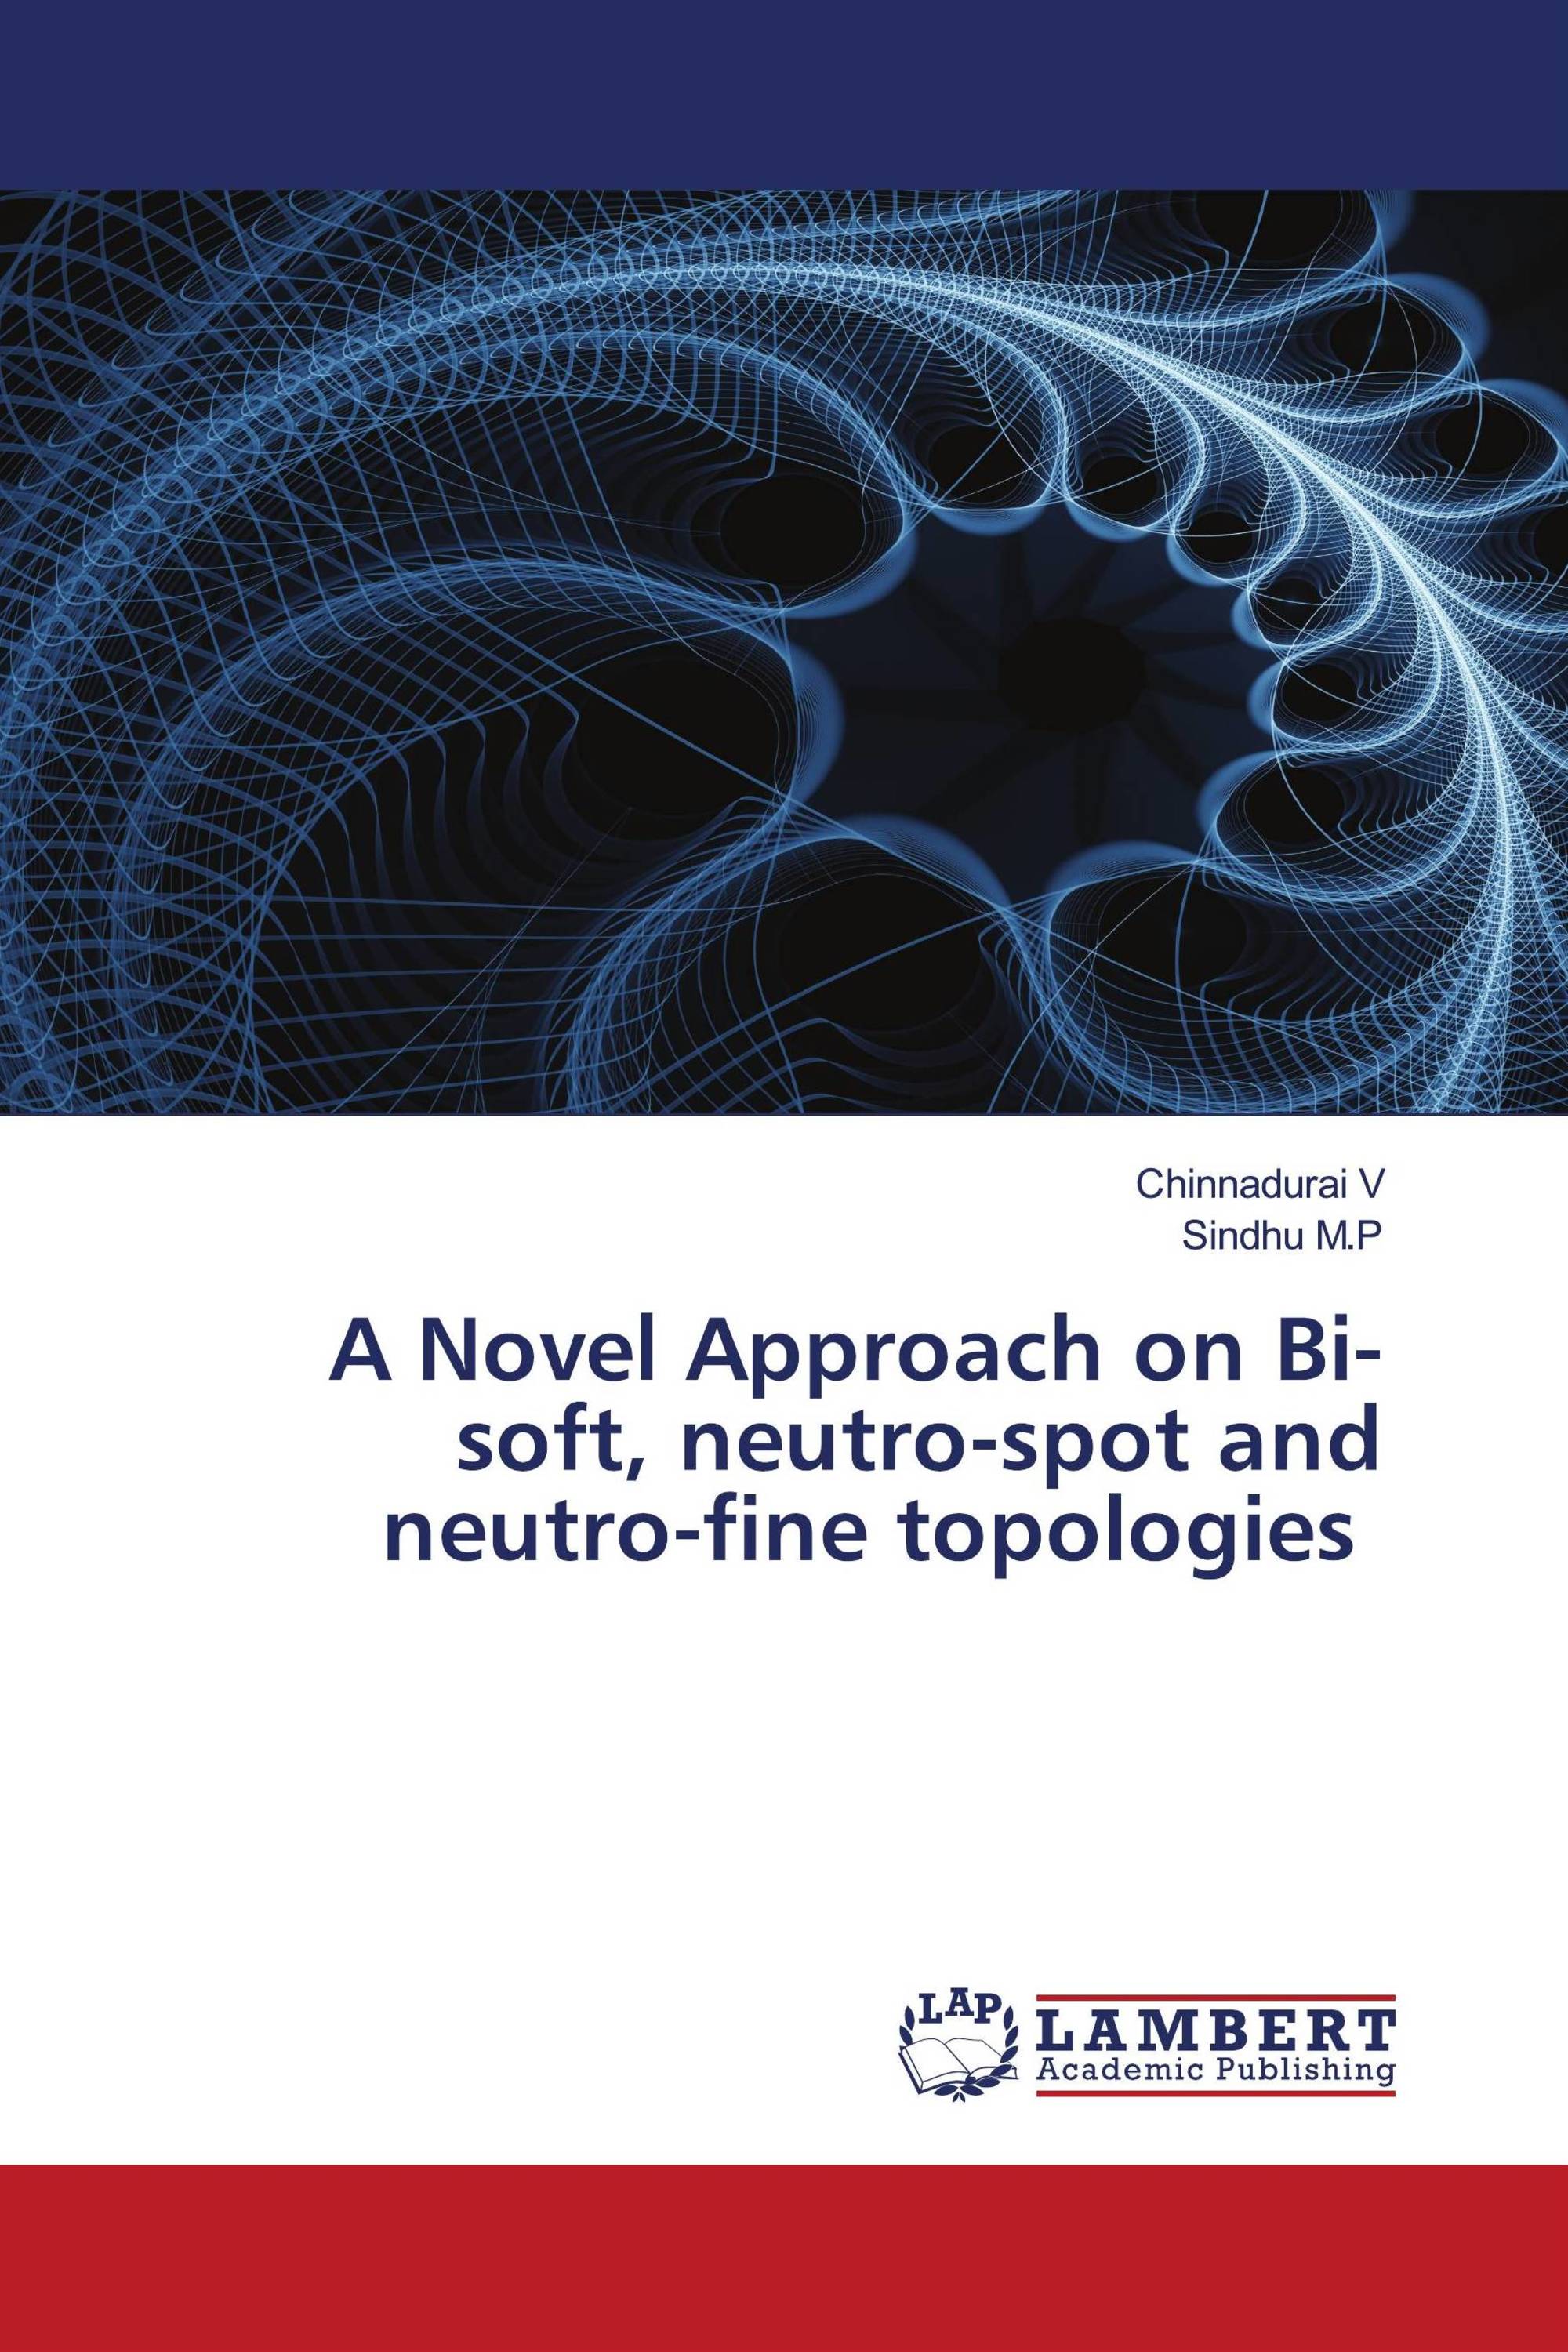 A Novel Approach on Bi-soft, neutro-spot and neutro-fine topologies